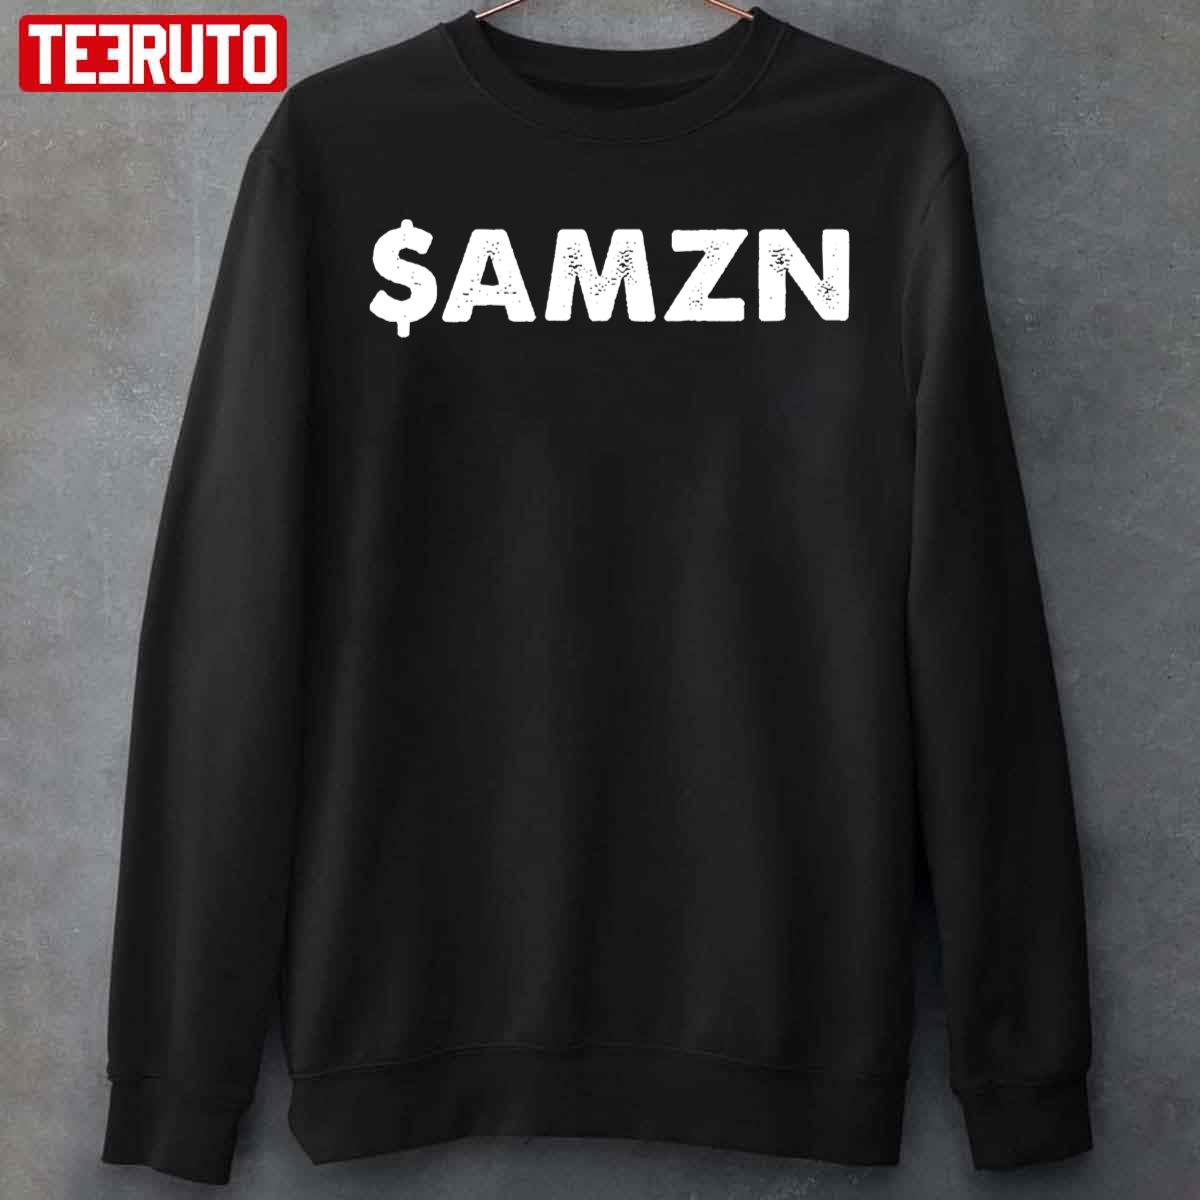 Amazon Stock $AMZN Unisex T-Shirt